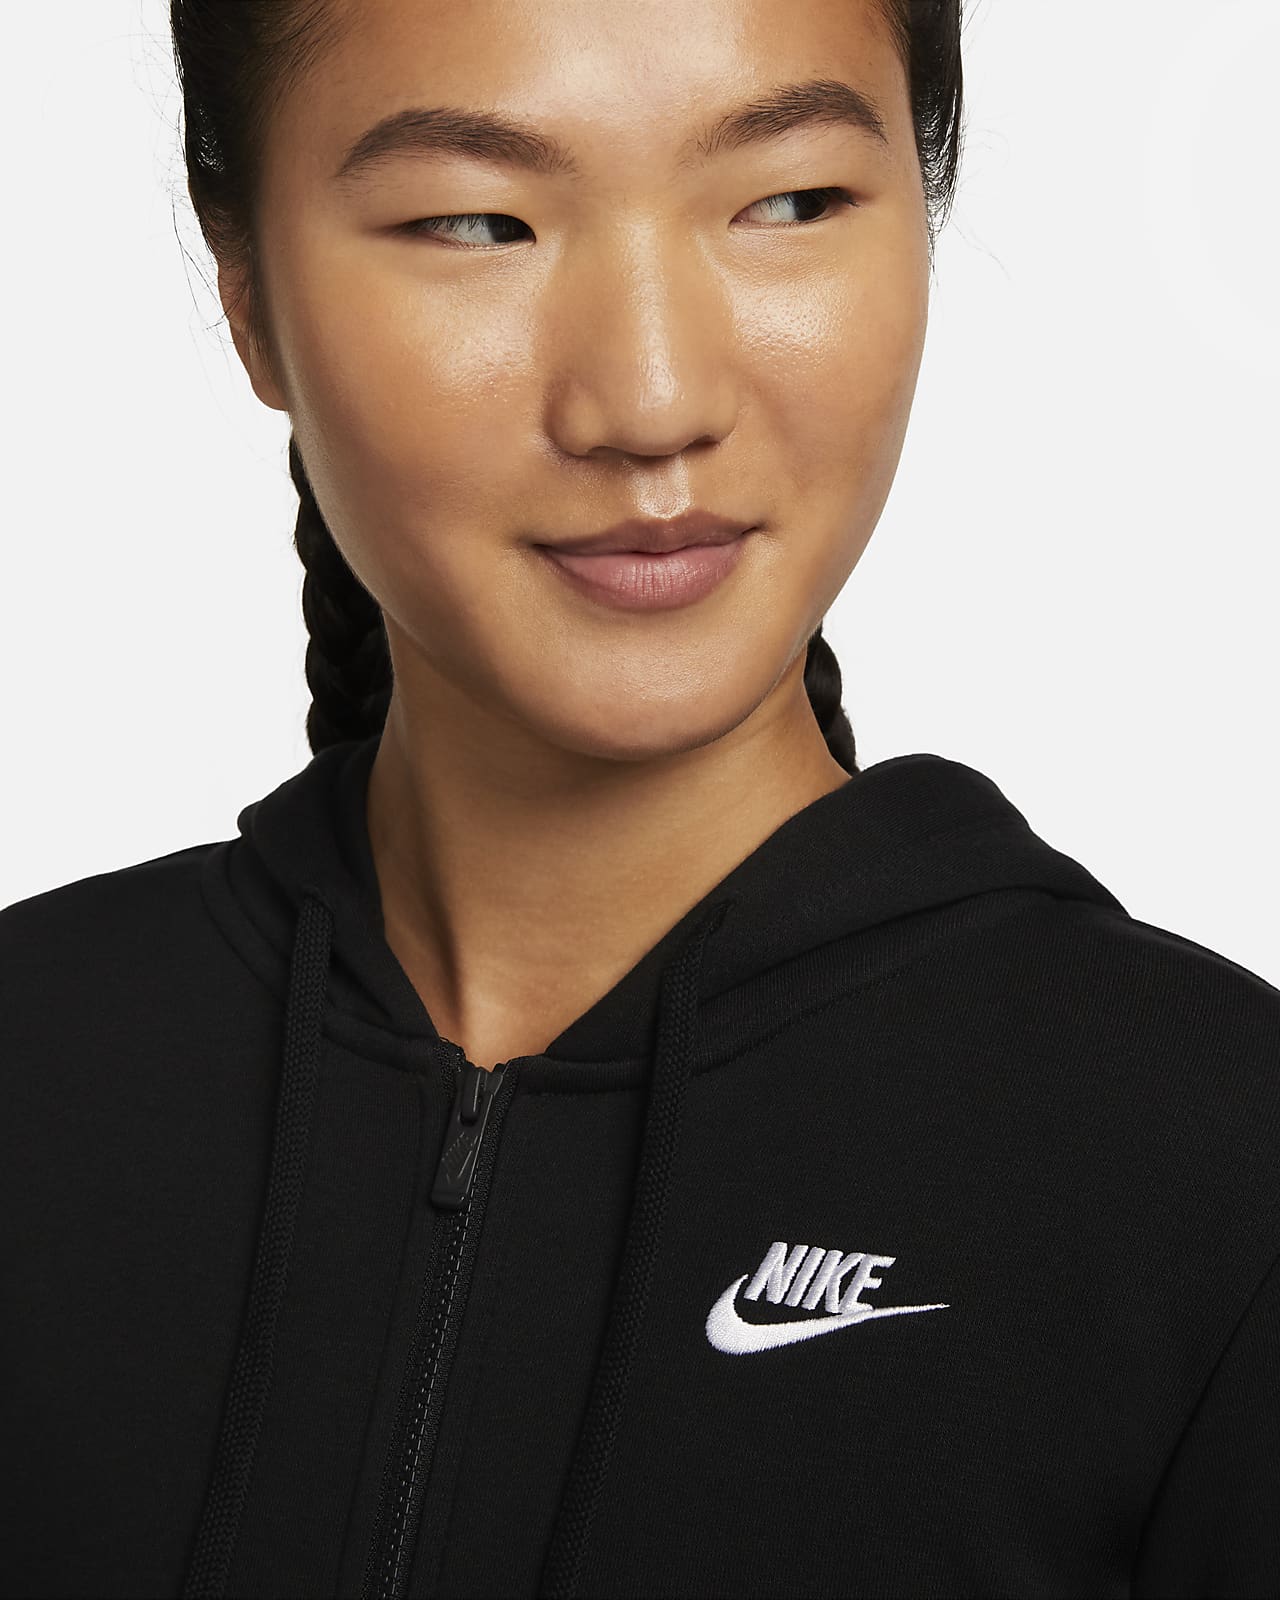 Women's Hoodies & Sweatshirts. Nike PH